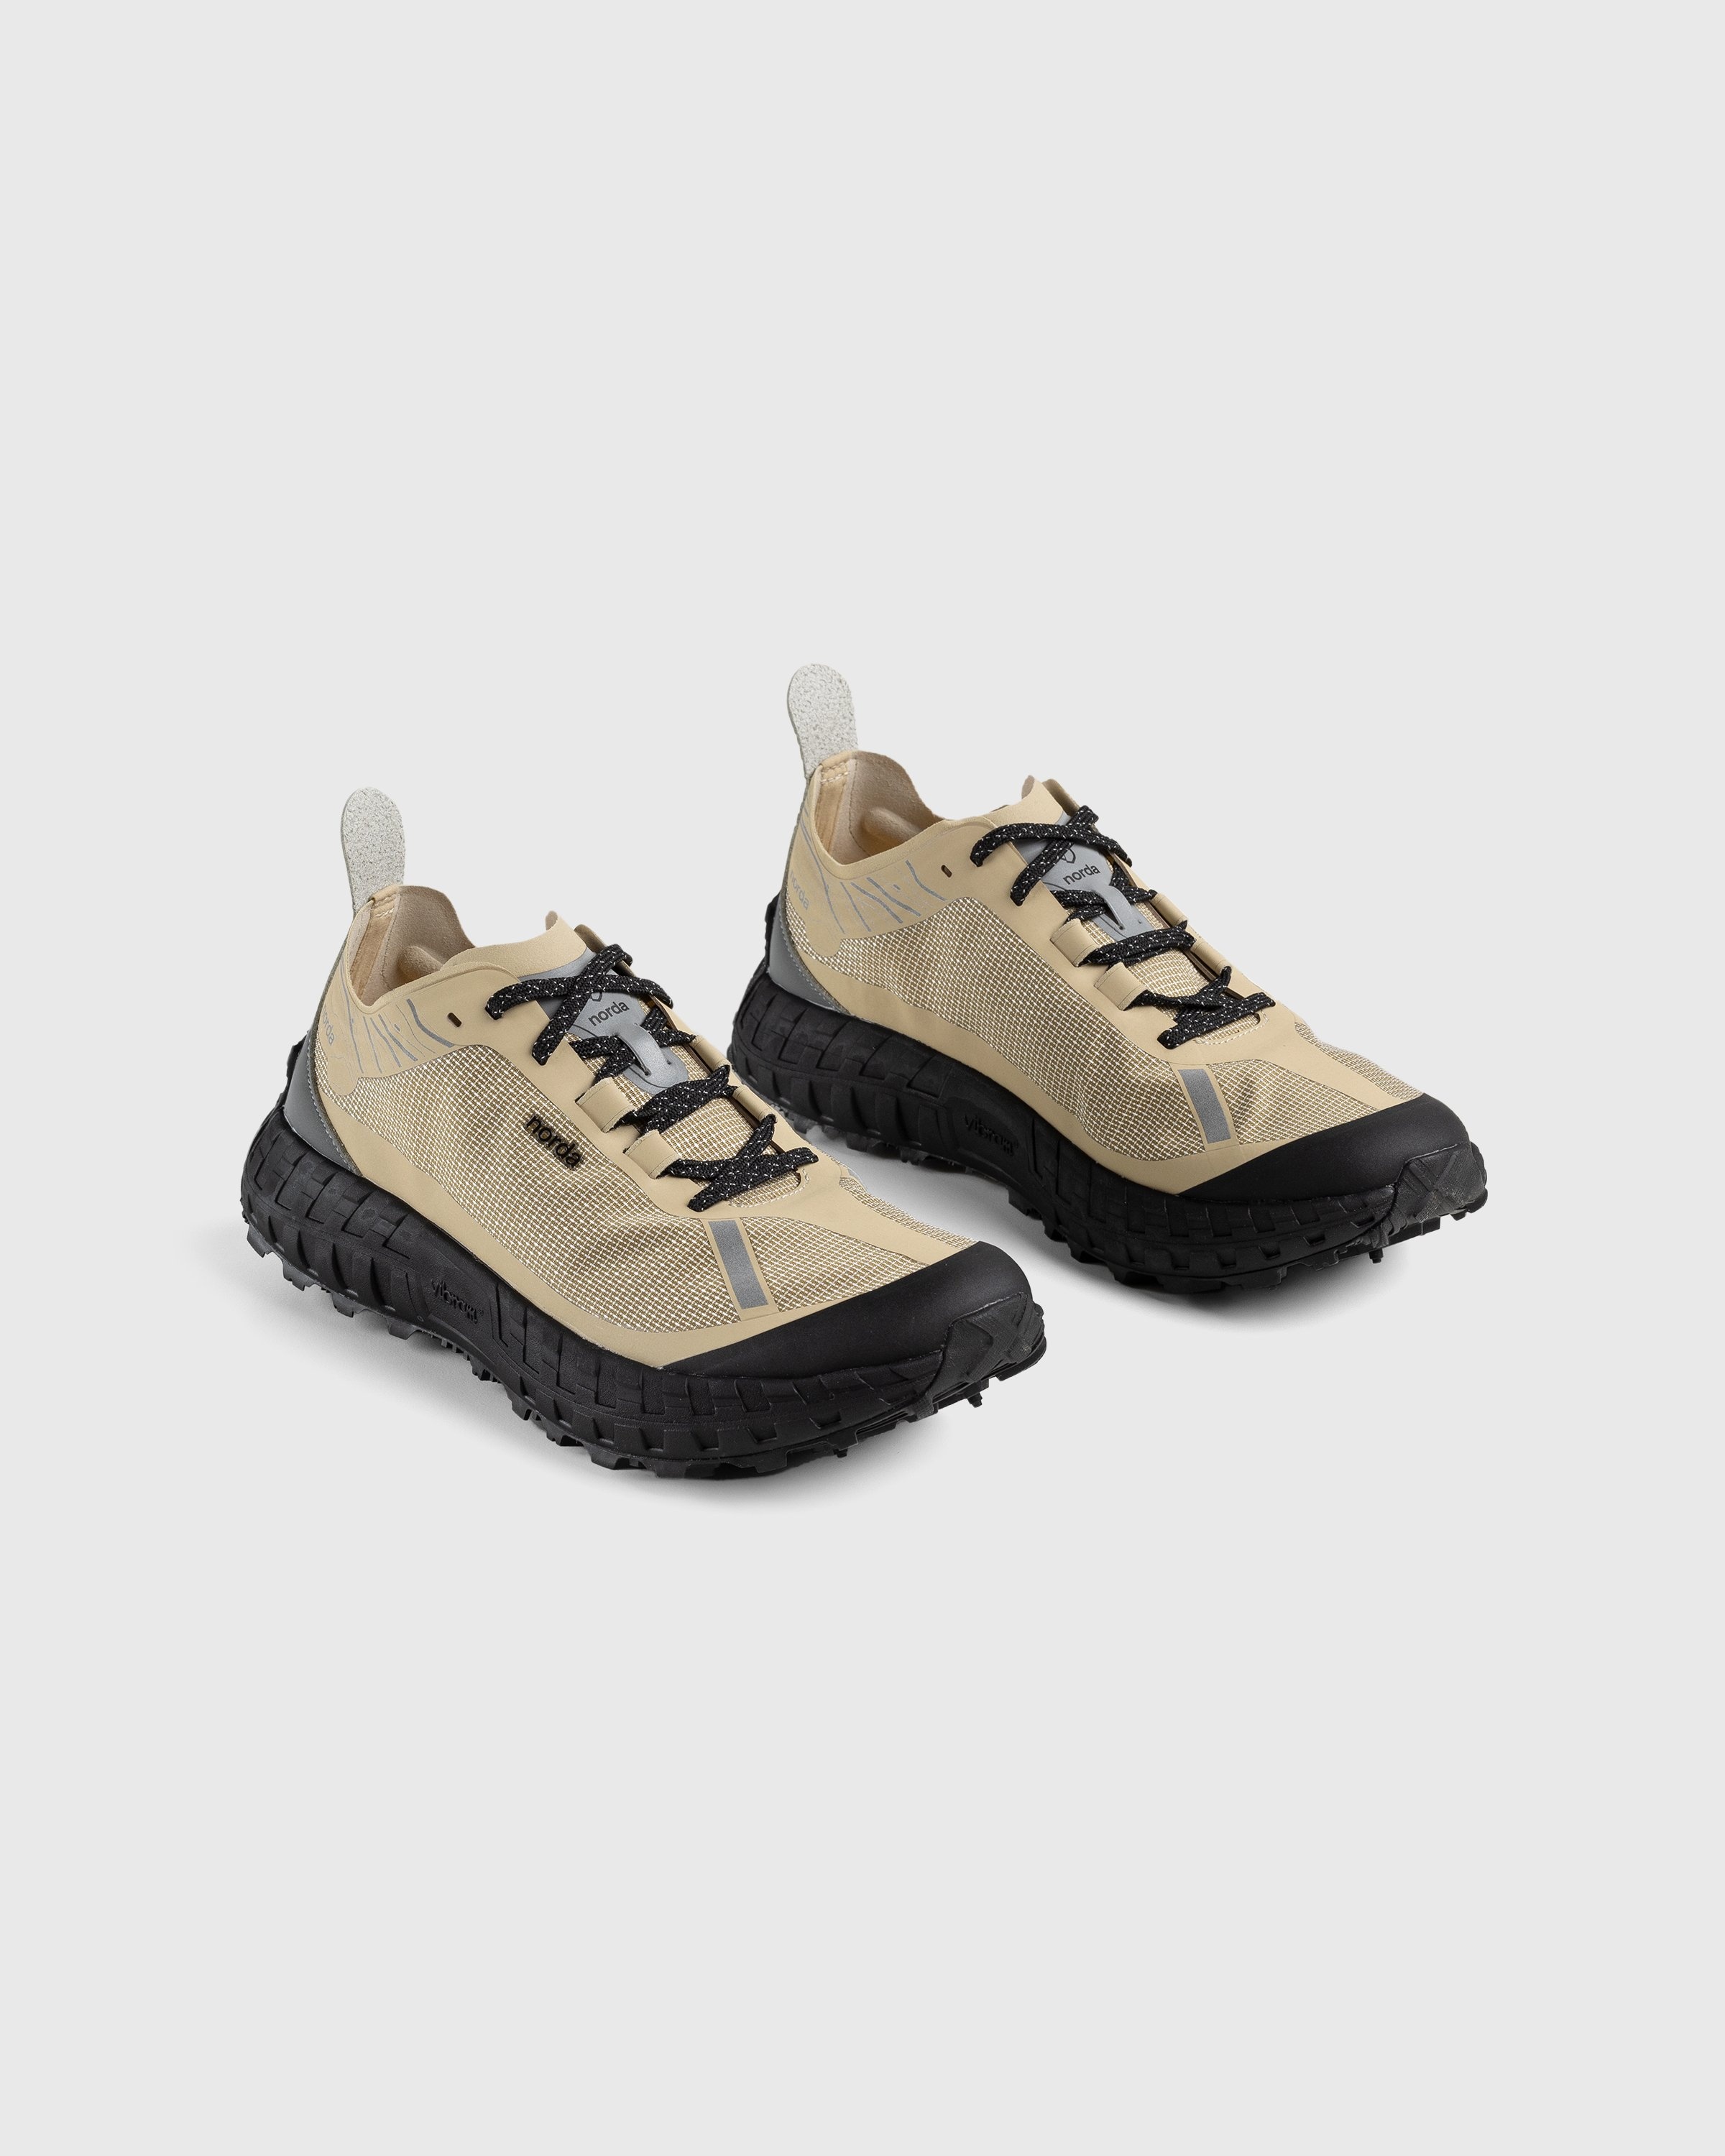 Norda – 001 M Pebble - Low Top Sneakers - Brown - Image 3